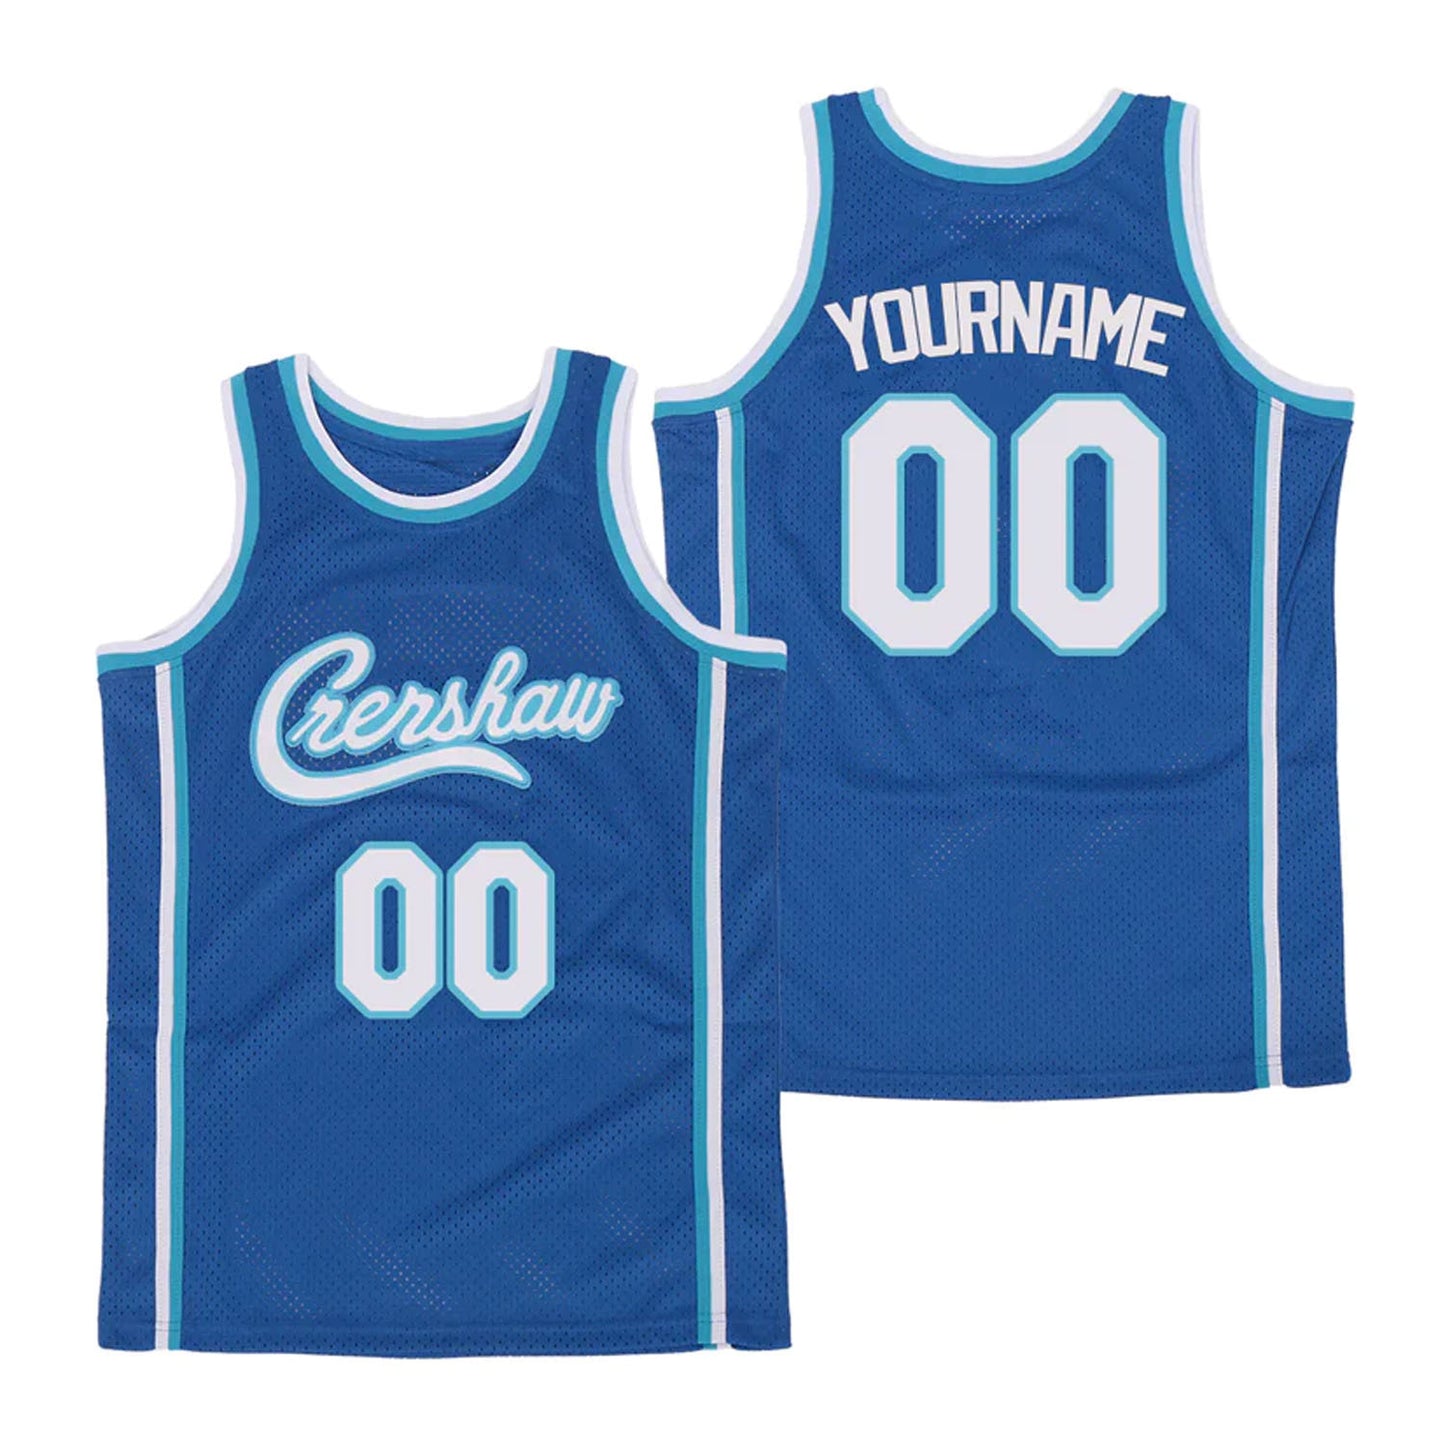 Crenshaw Custom Basketball Jersey